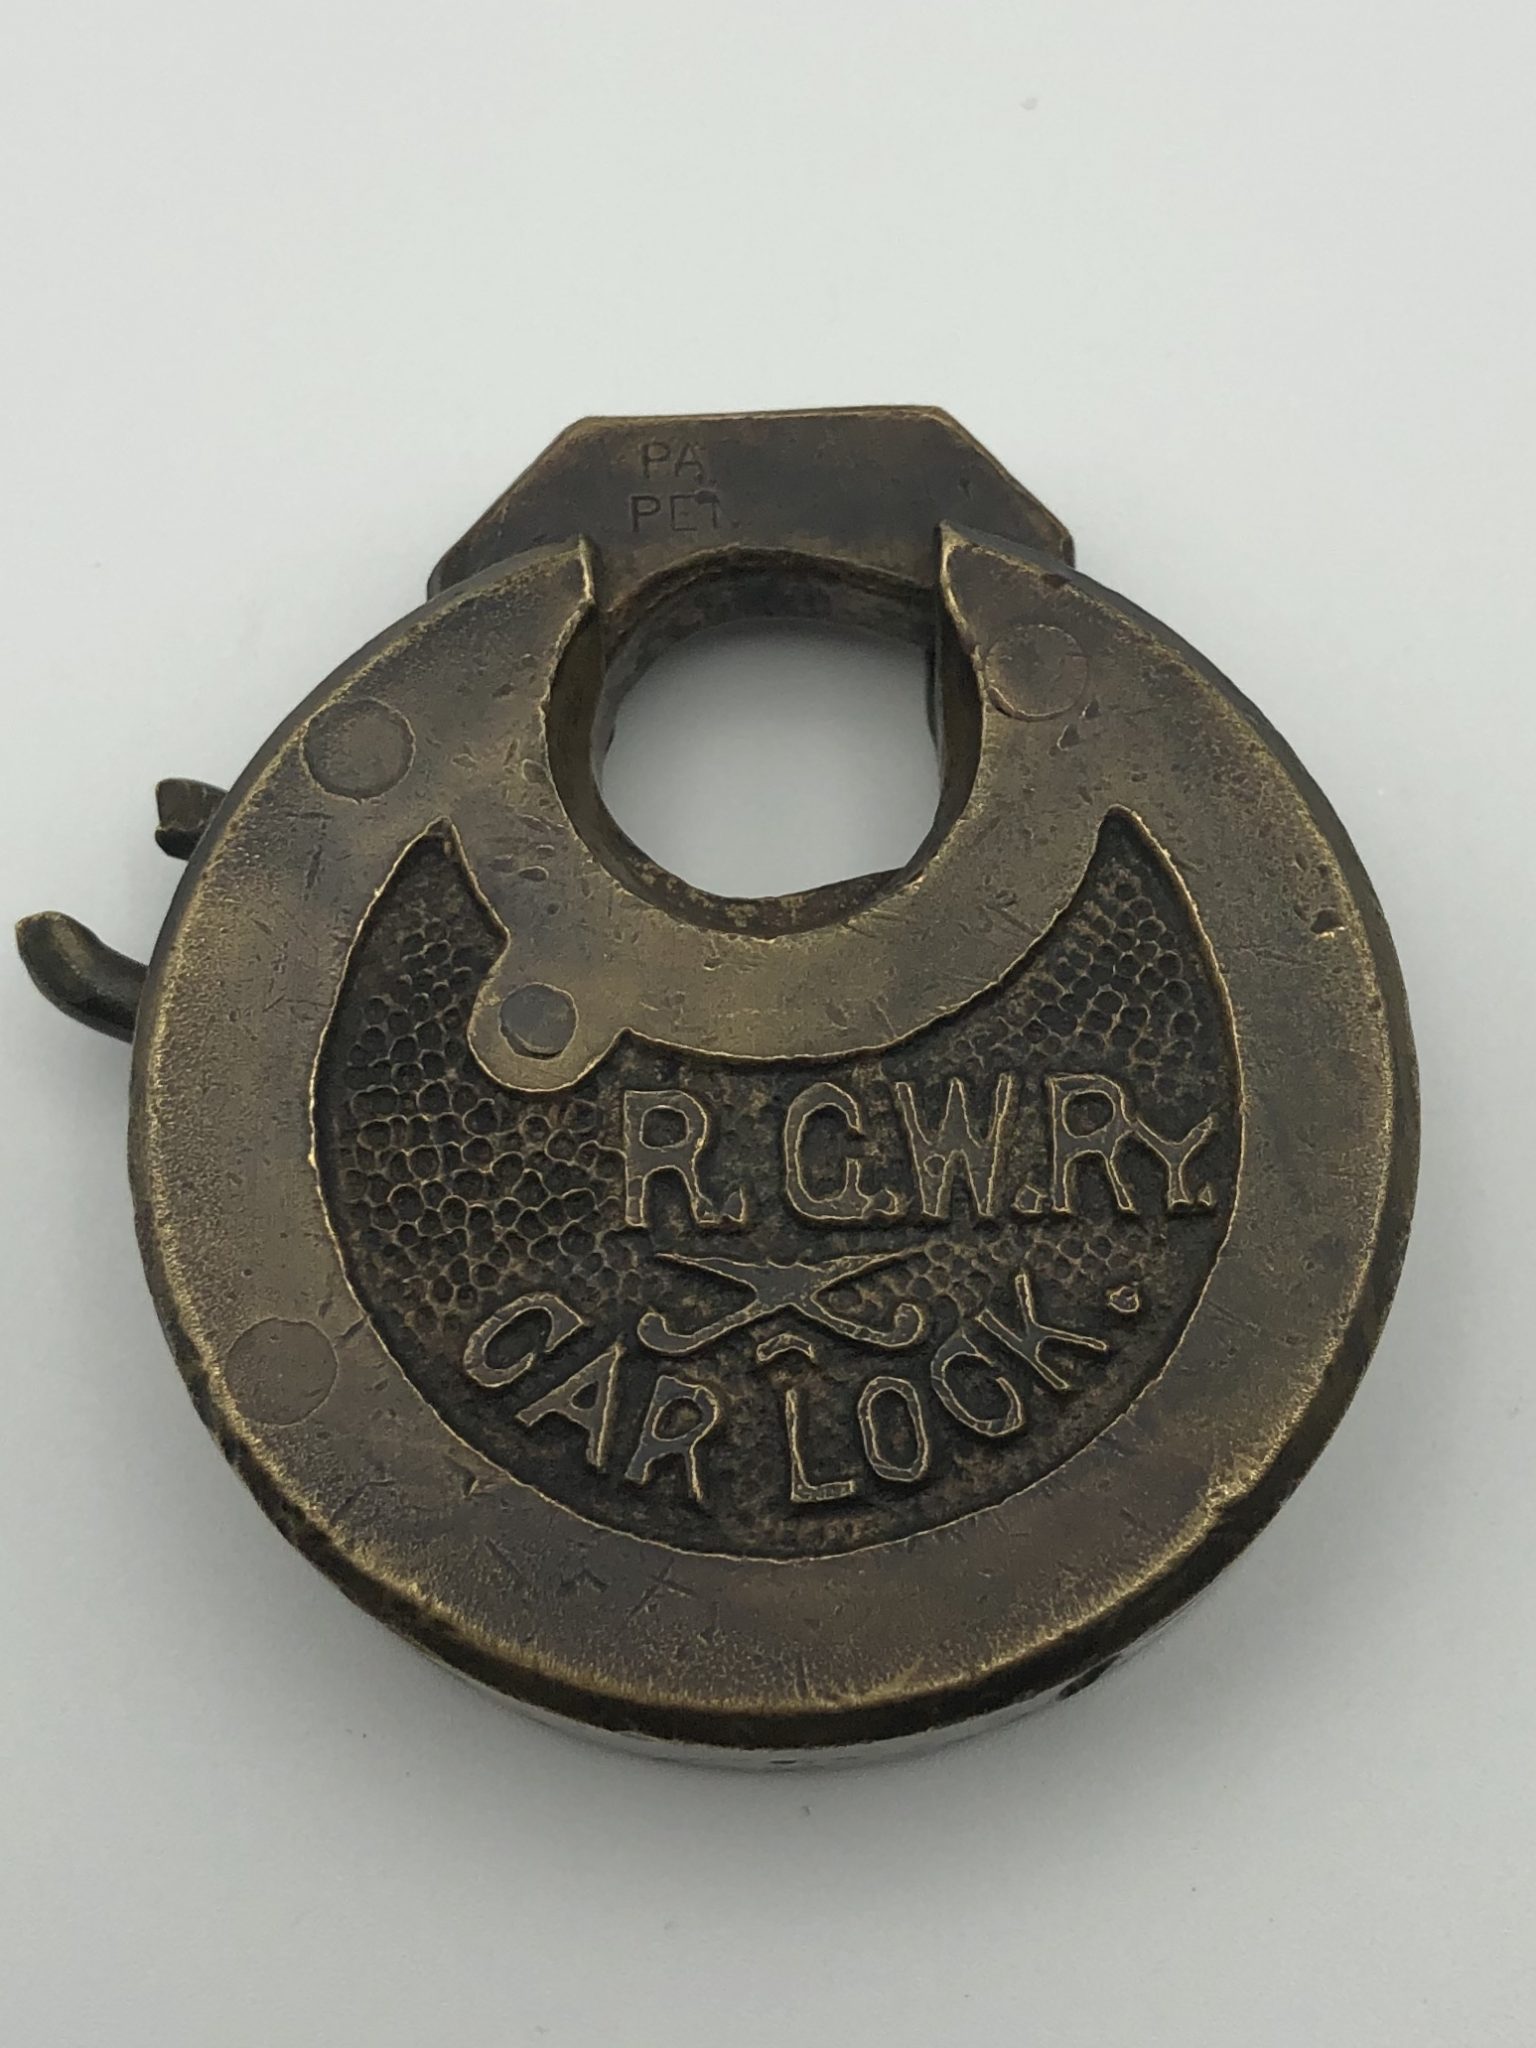 RGWRY Railroad Car Lock